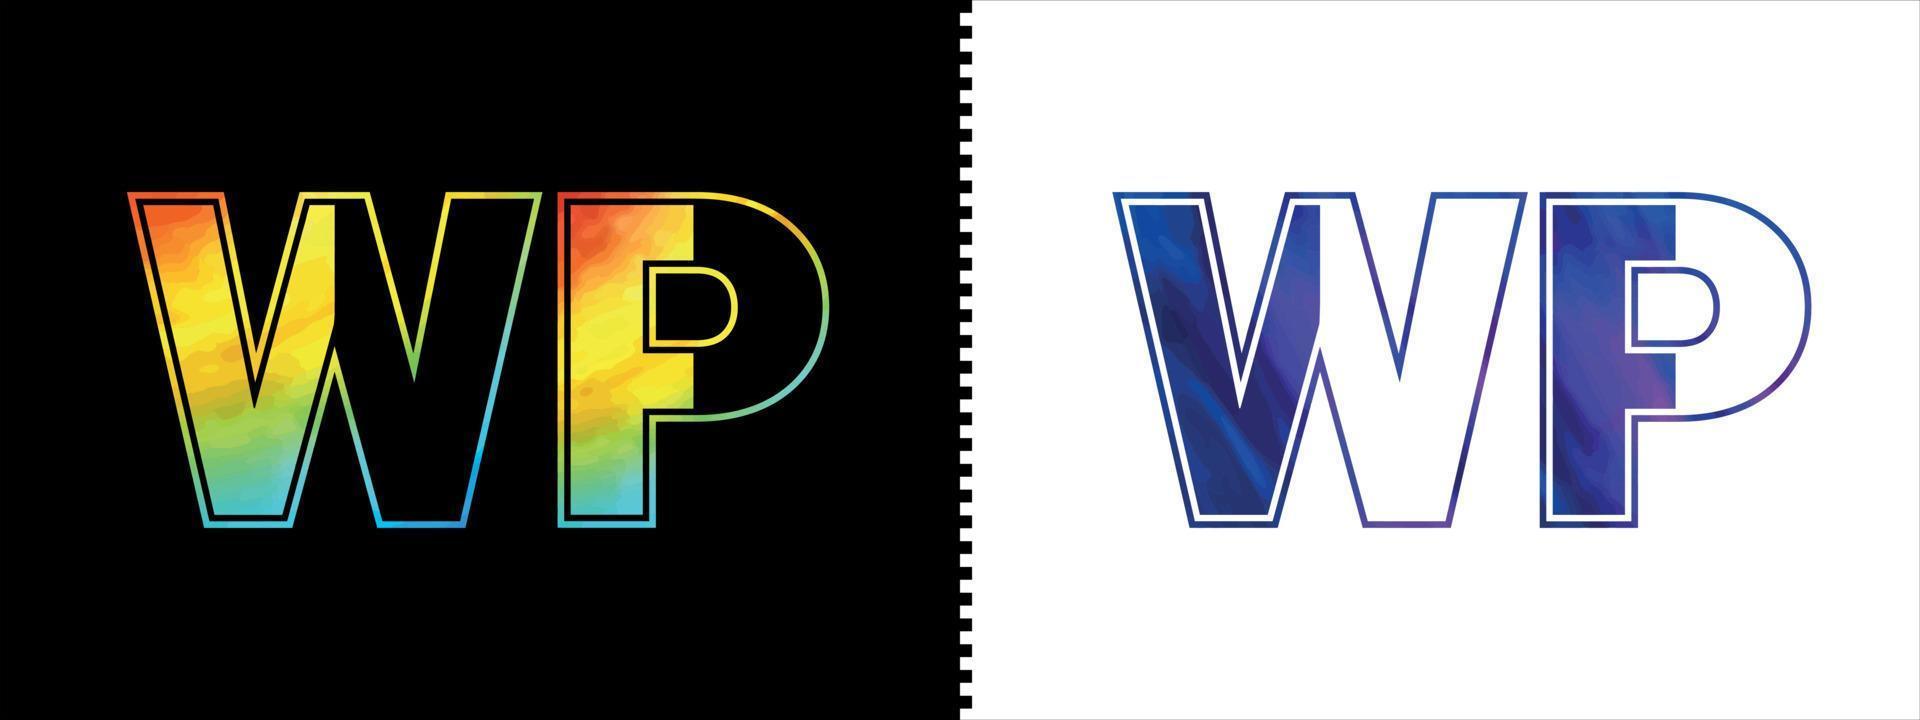 letra wp logo diseño vector modelo. creativo moderno lujoso logotipo para corporativo negocio identidad